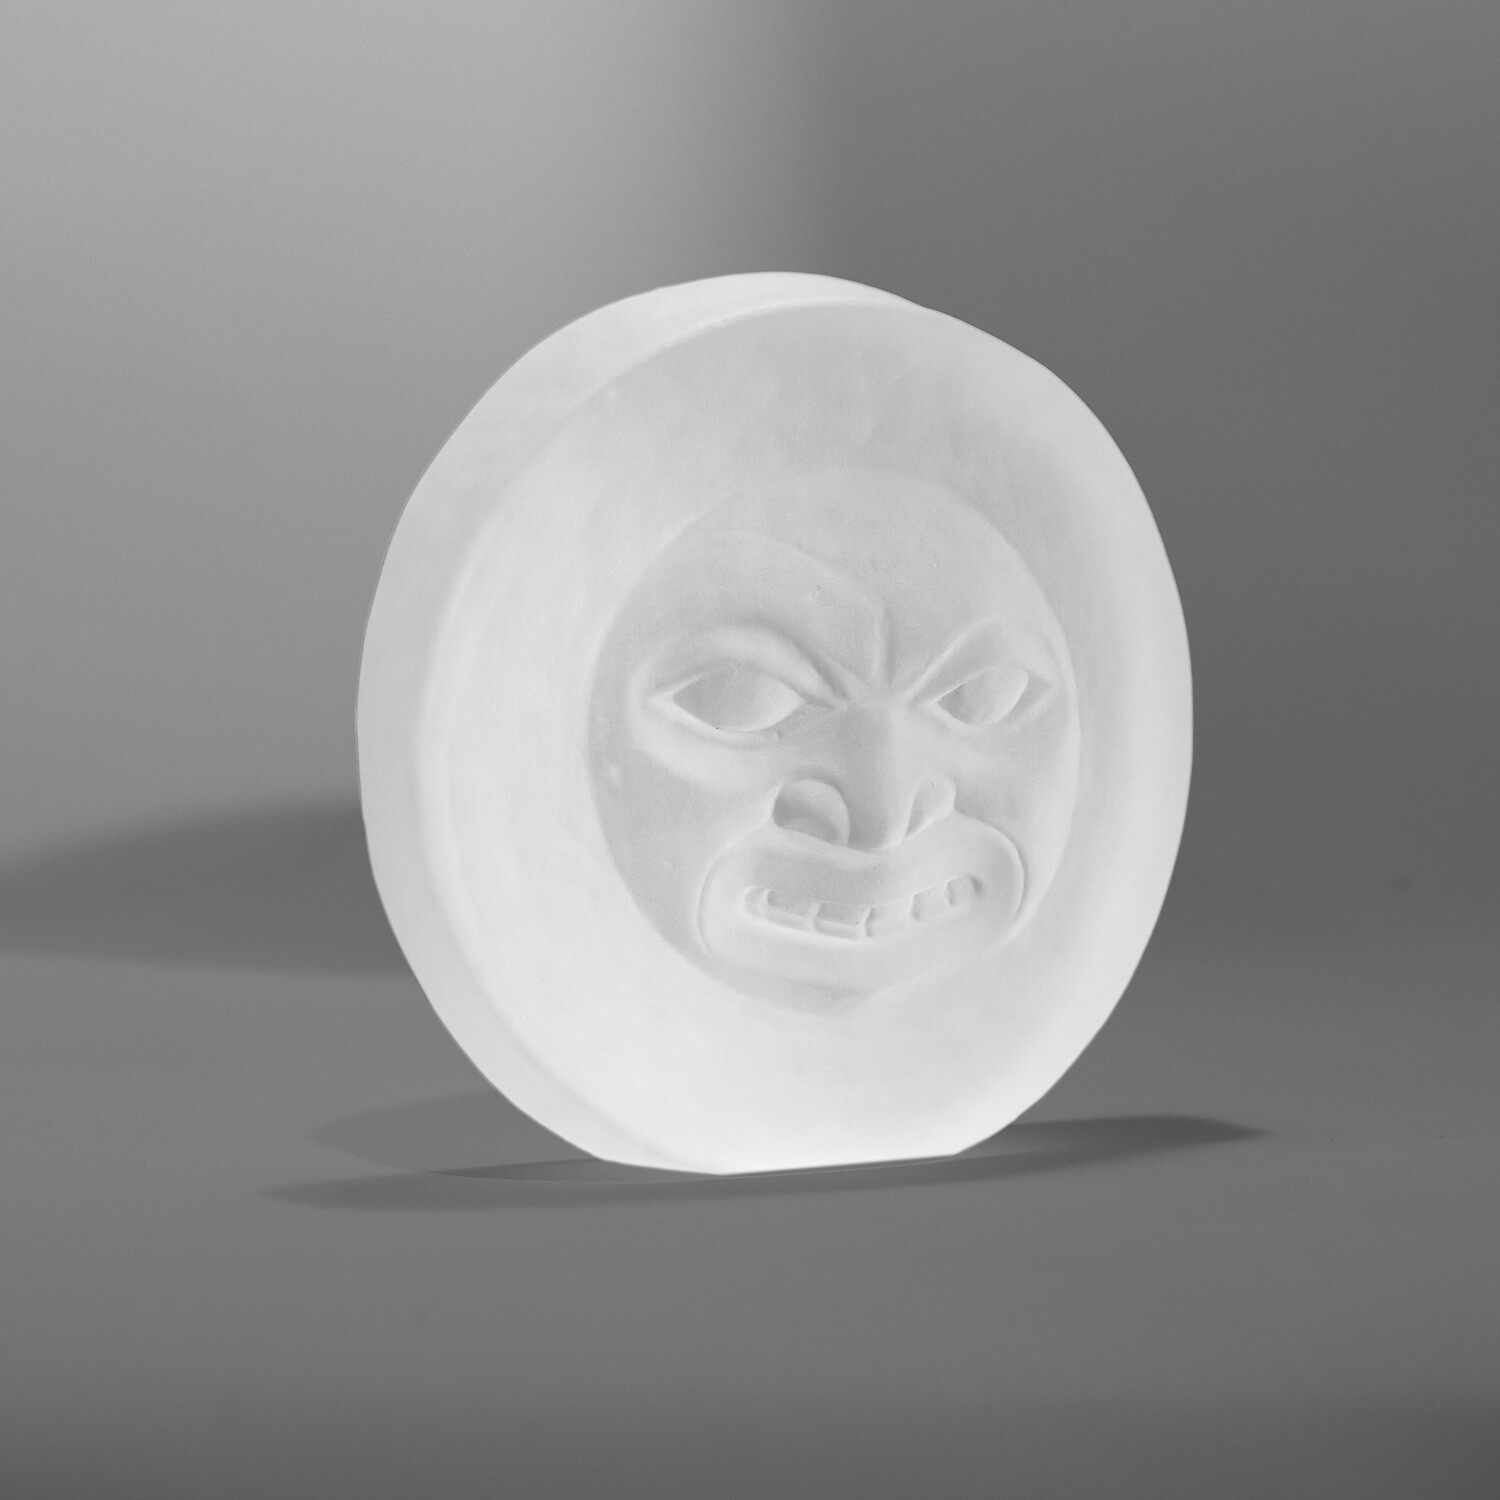 Moon Mask
Preston Singletary
TlingitCast glass
3" x 3" x 1"
$300